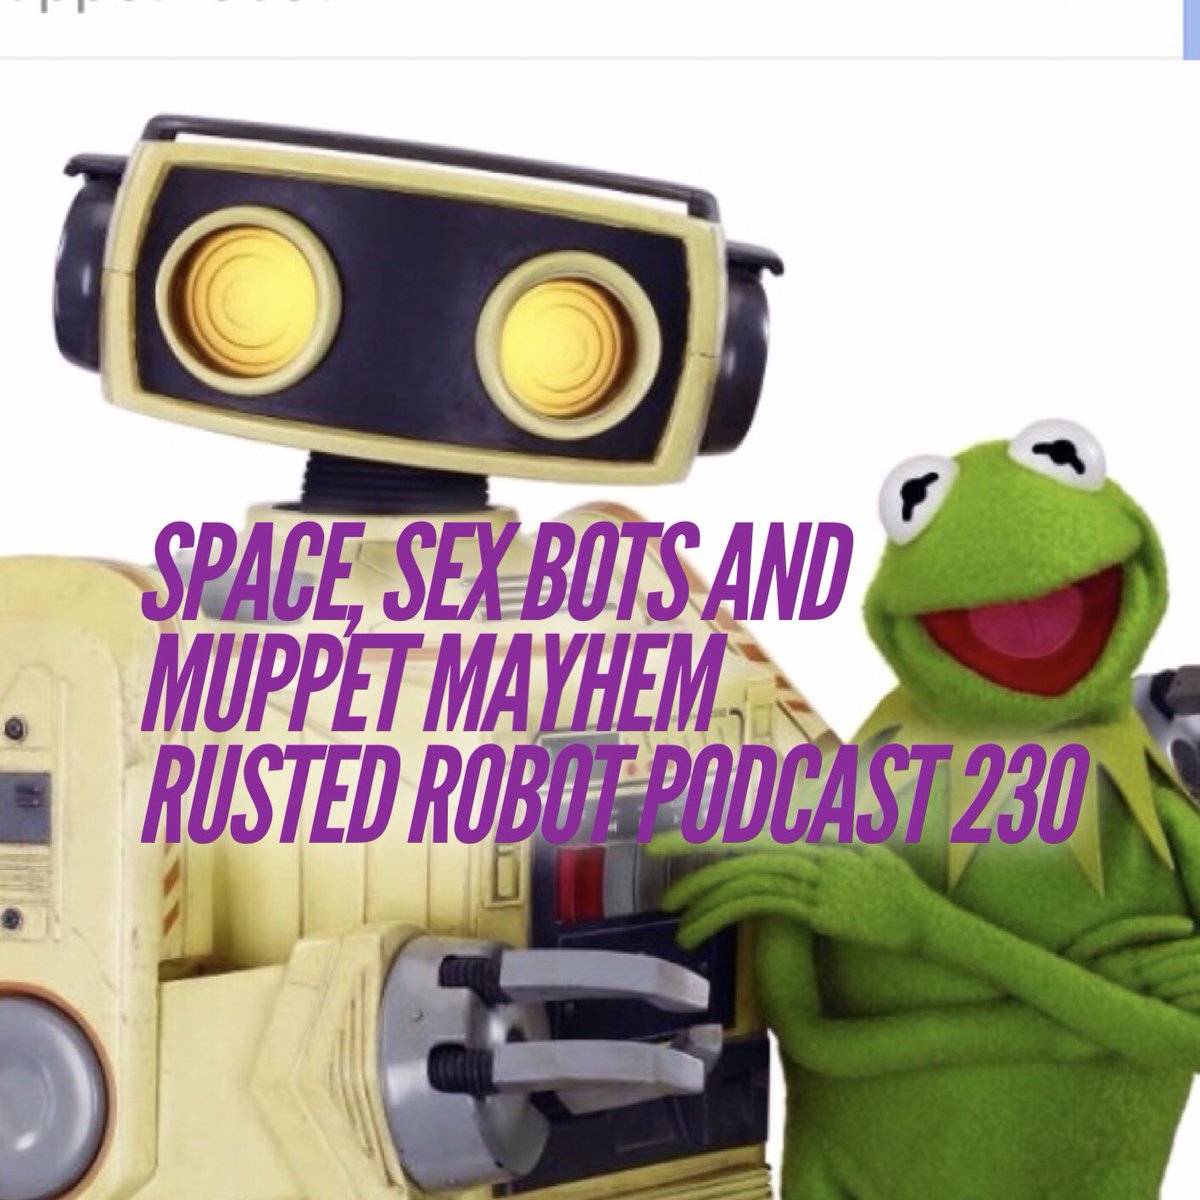 NEW EPISODE: Space, Sex Bots and Muppet Mayhem - 230 therustedrobot.podbean.com/mobile/e/space… #sex #Robot #Muppets #StarTrekDiscovery #PodernFamily #podcast #Podbean #ThePWA #PodcastHQ #Podsunited #underdogpods #space #punisher